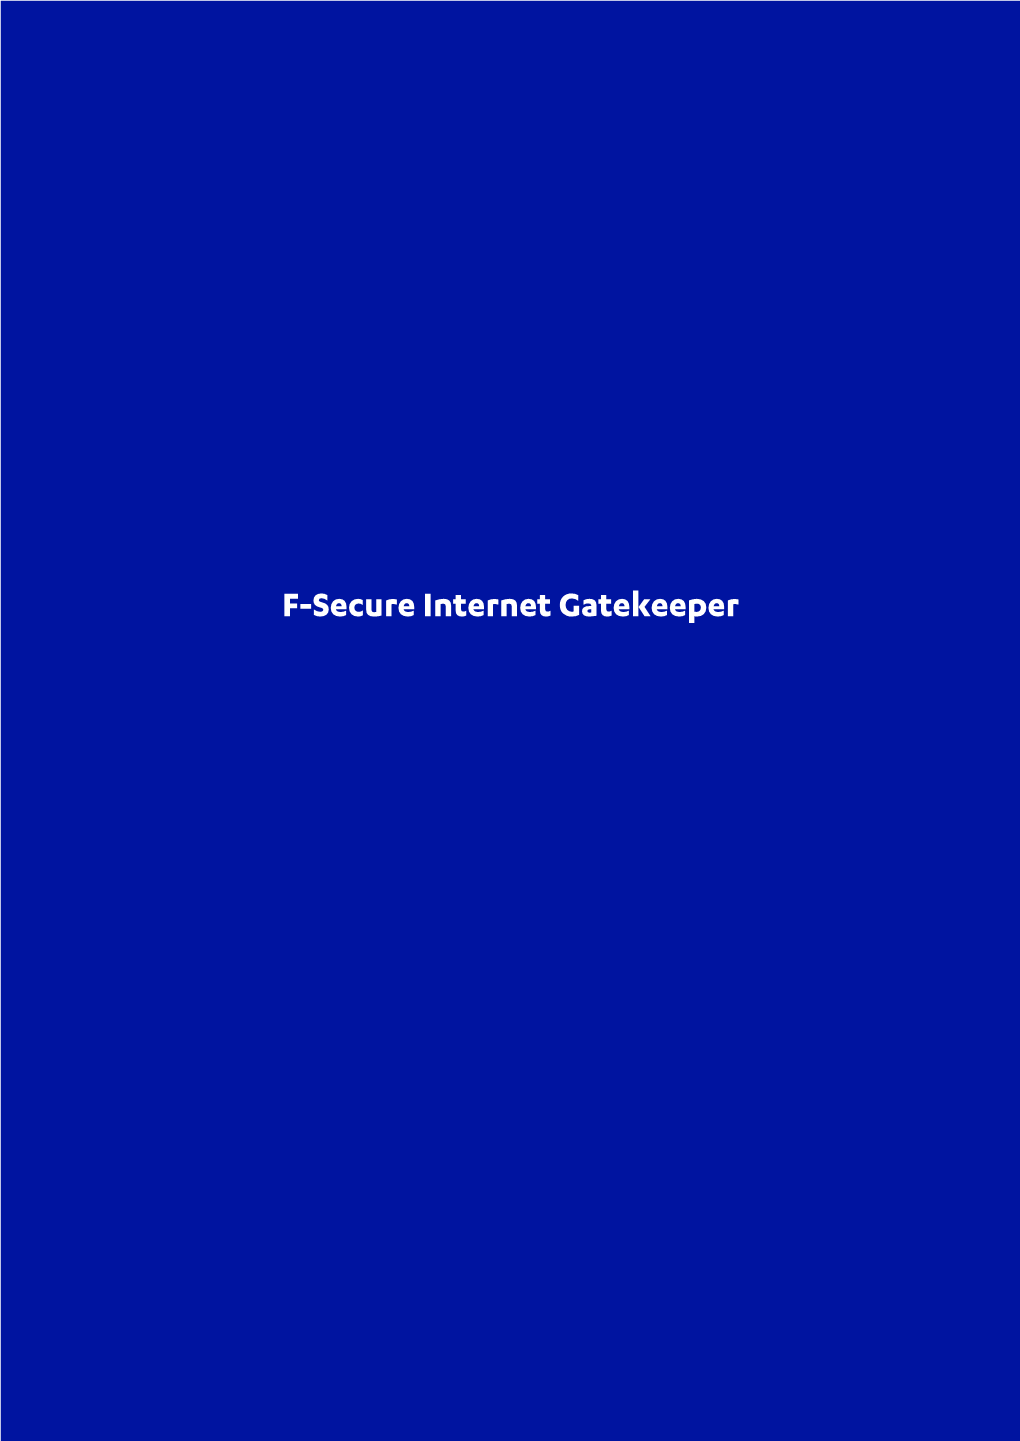 F-Secure Internet Gatekeeper Ii | Contents | F-Secure Internet Gatekeeper